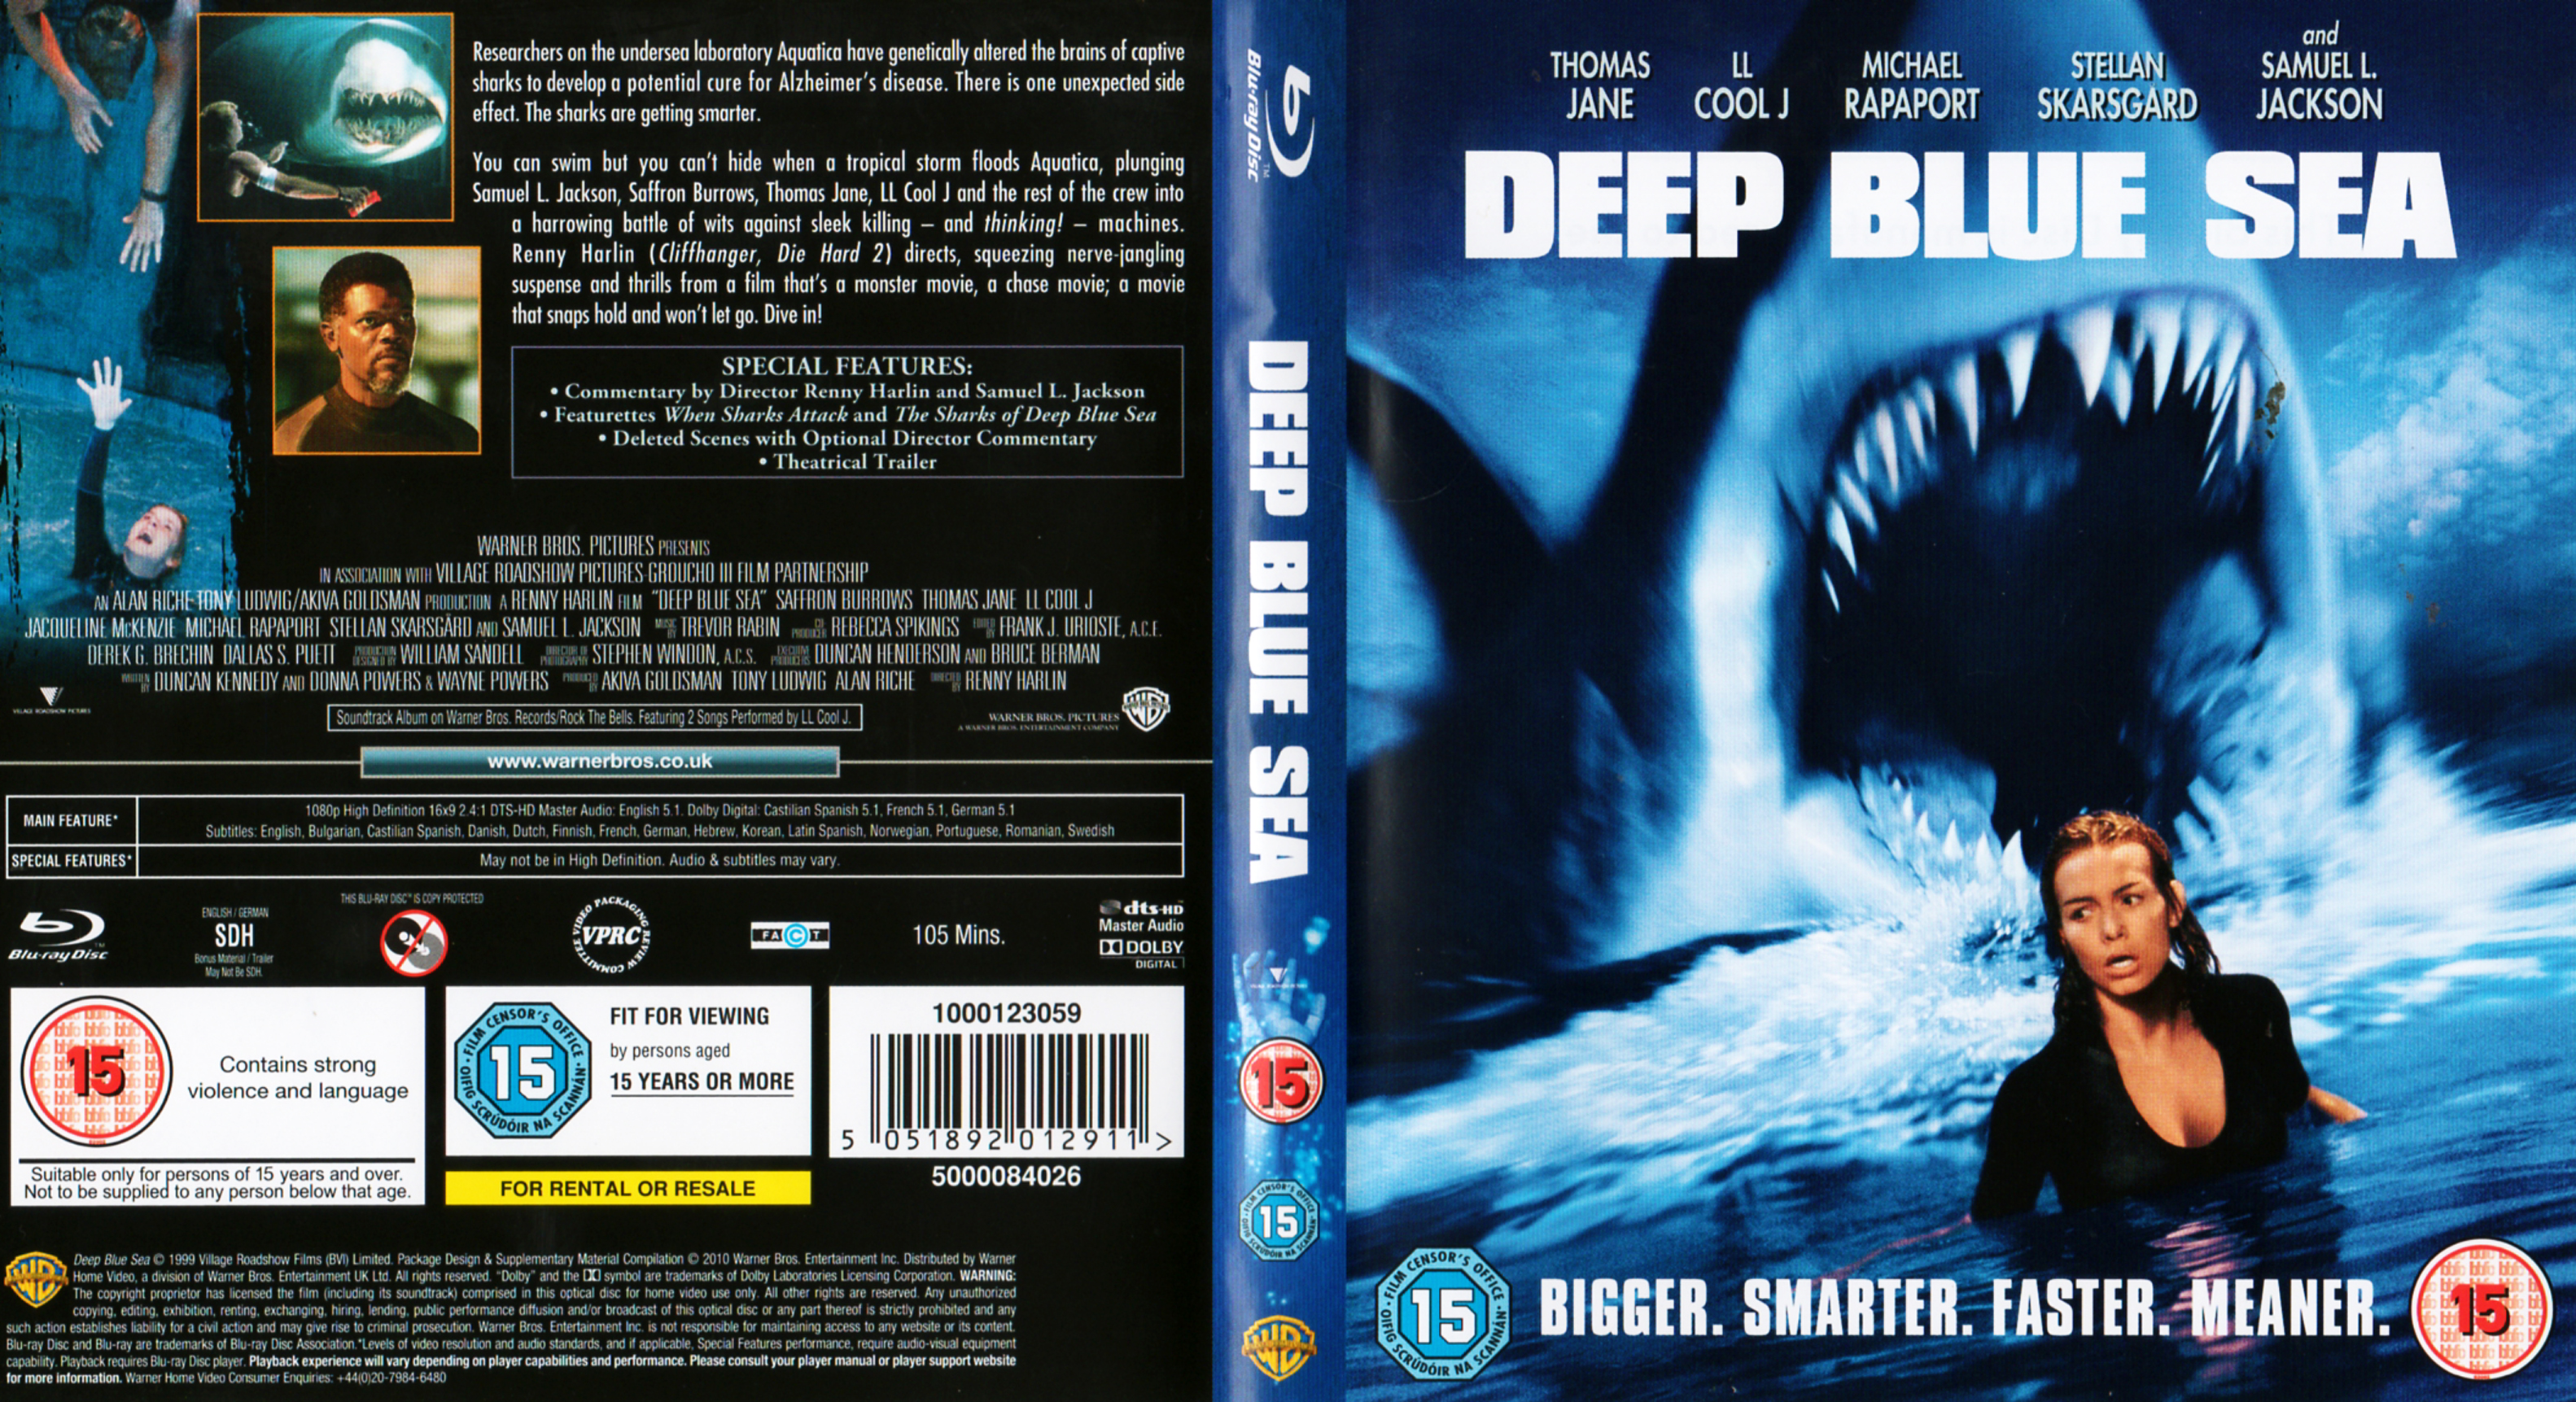 Jaquette DVD Deep blue sea - Peur bleue Zone 1 (BLU-RAY)